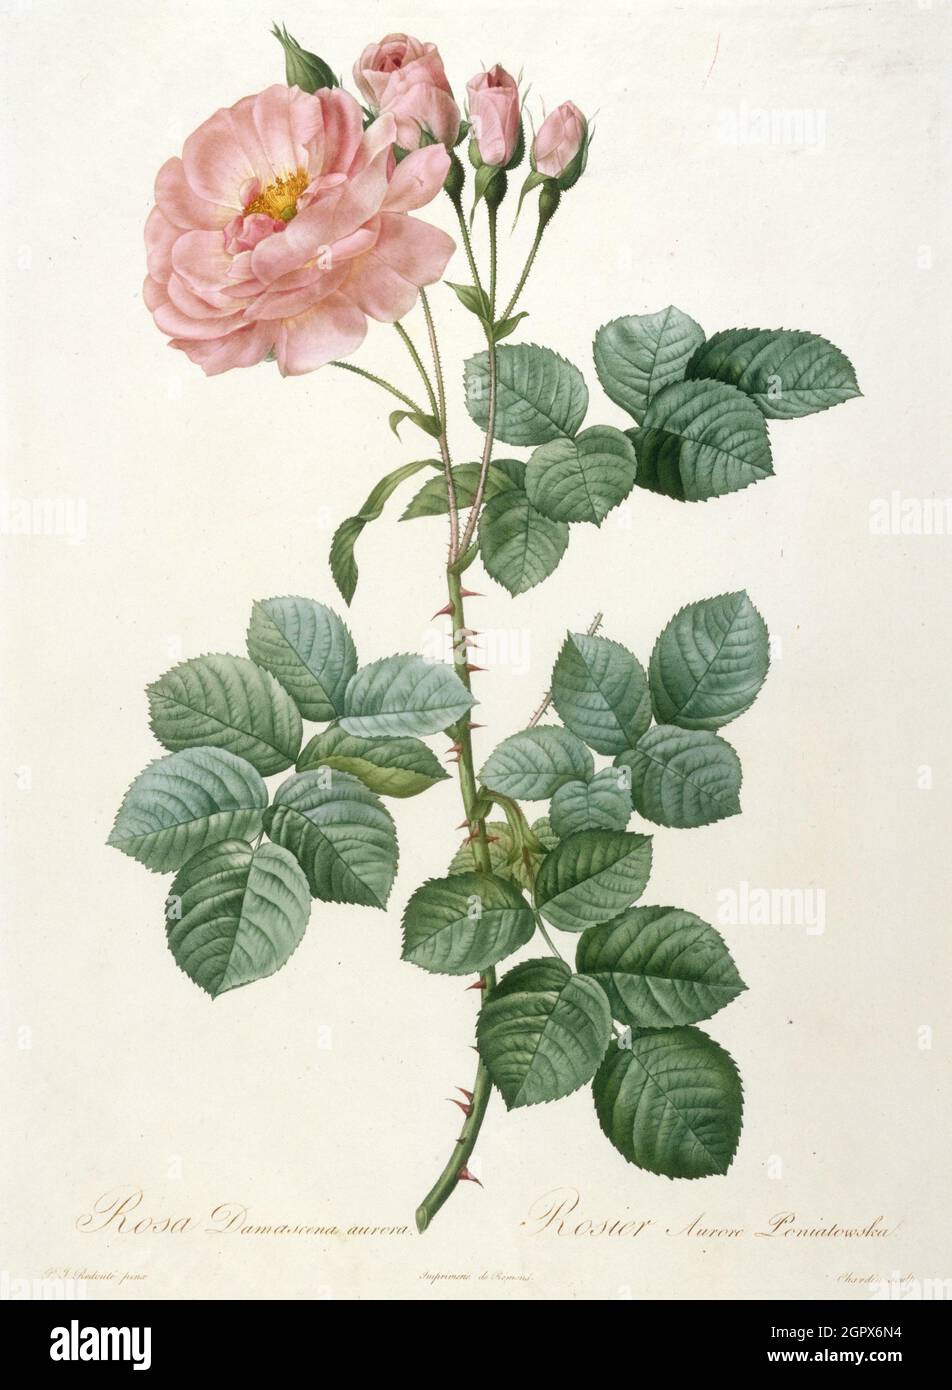 Rosa Damascena aurora, Rosier Aurore Poniatowska (From La Couronne de roses), 1817-1824. Private Collection. Stock Photo